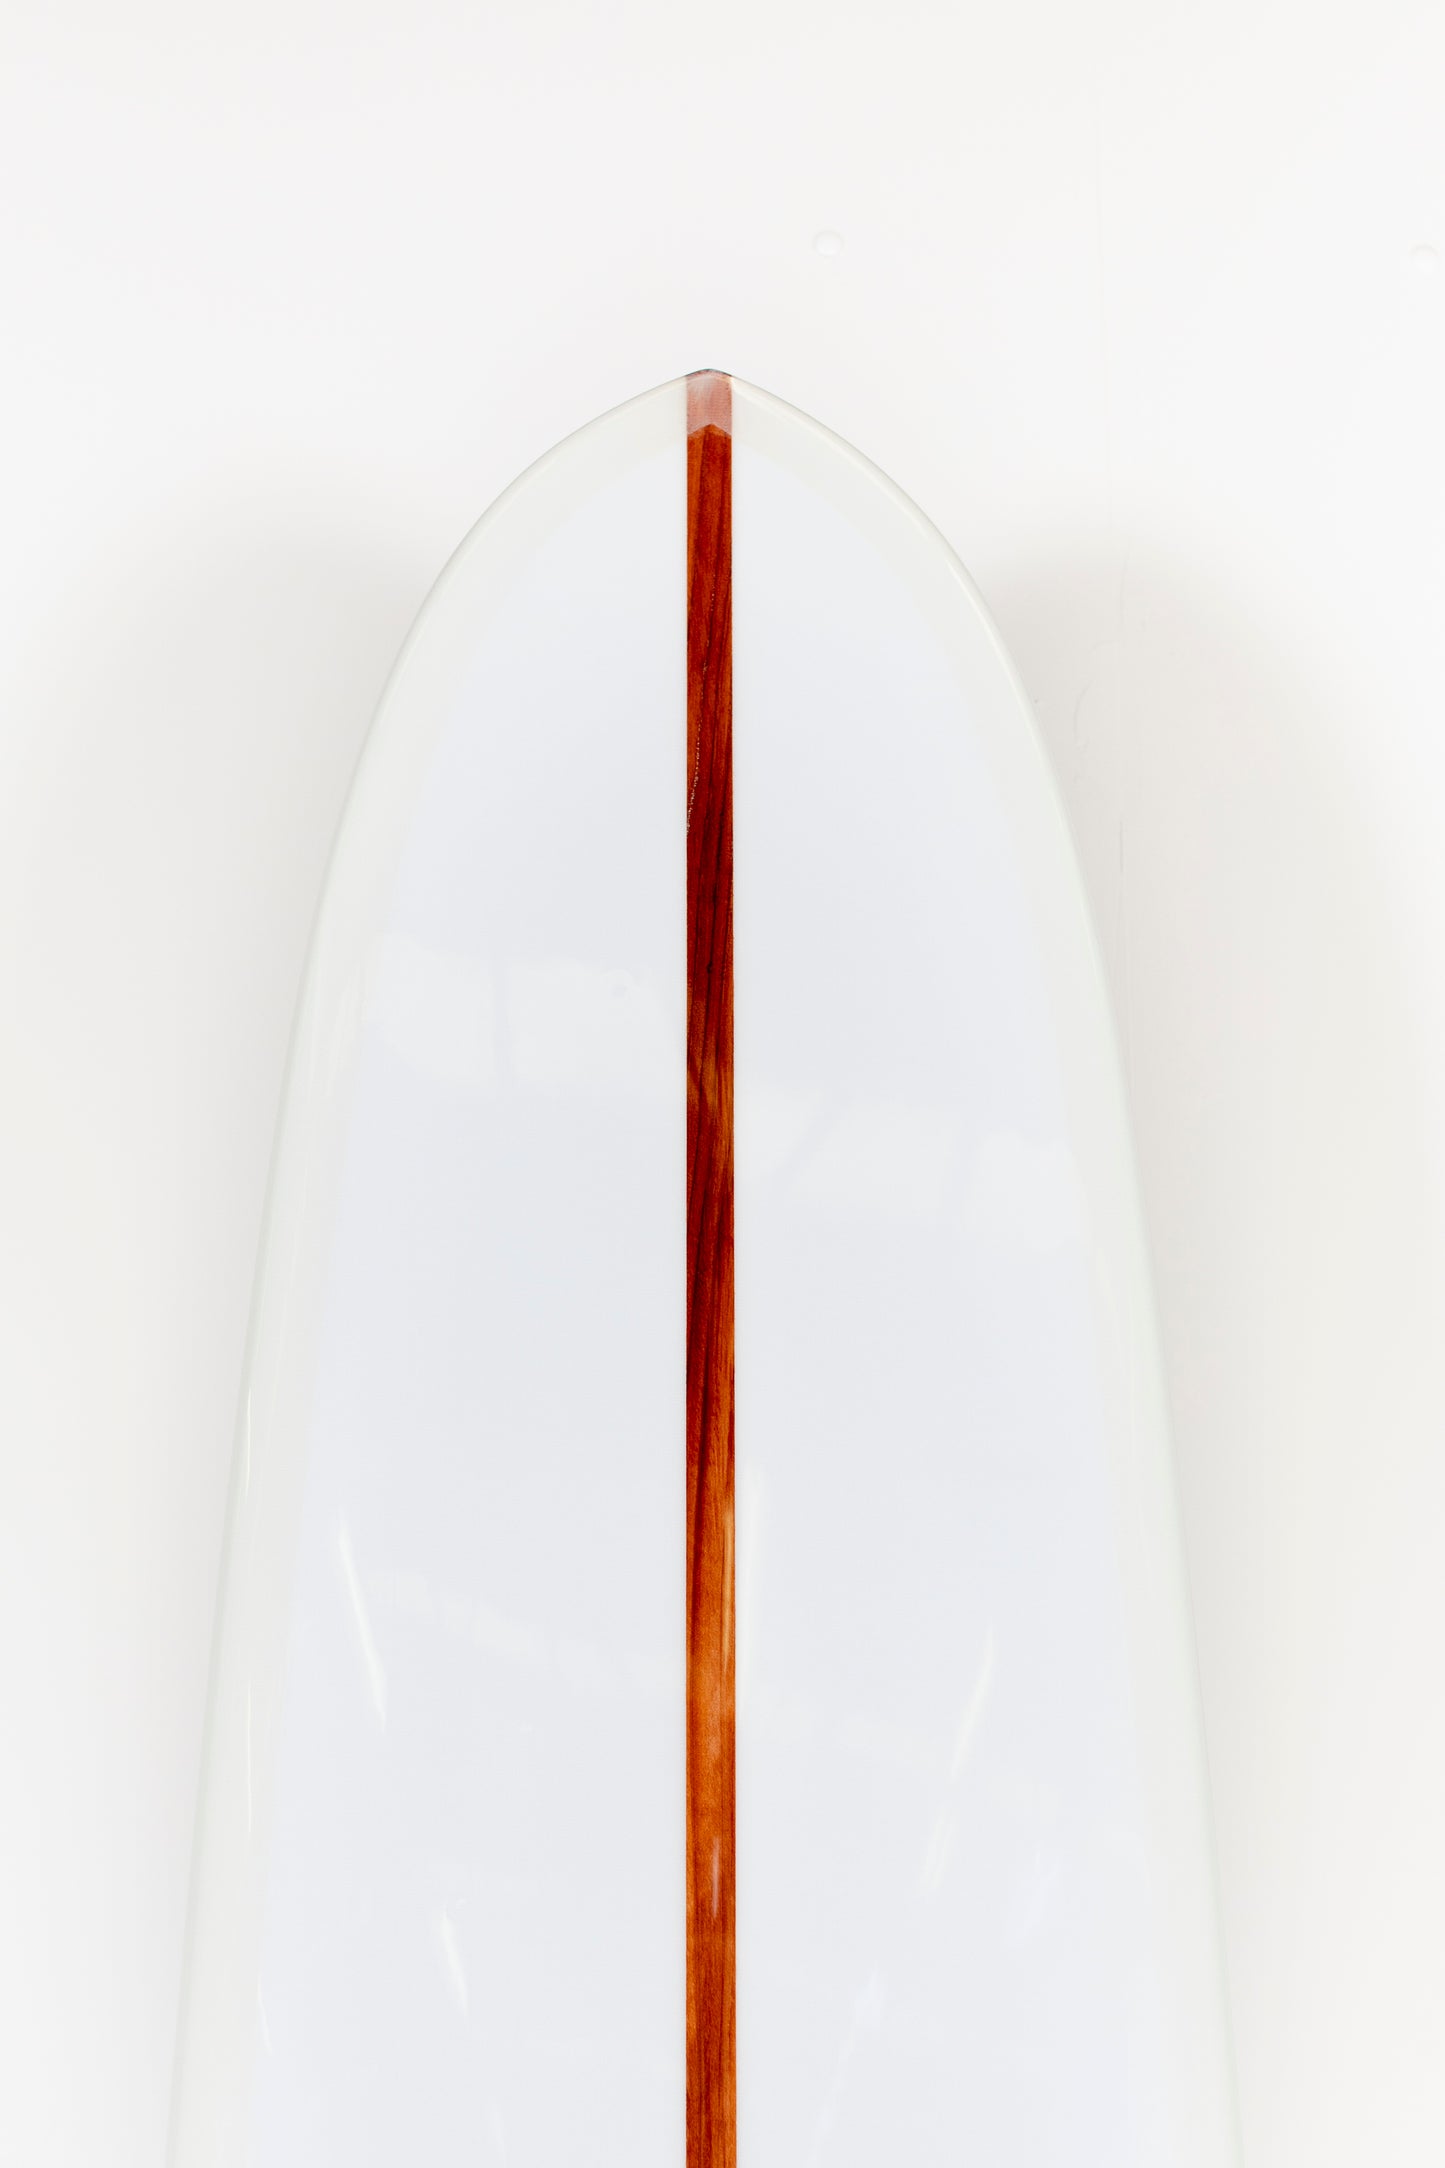 
                  
                    Pukas Surf Shop - Garmendia Surfboards - BULLET - 9’2” x 22 7/8 x 3
                  
                